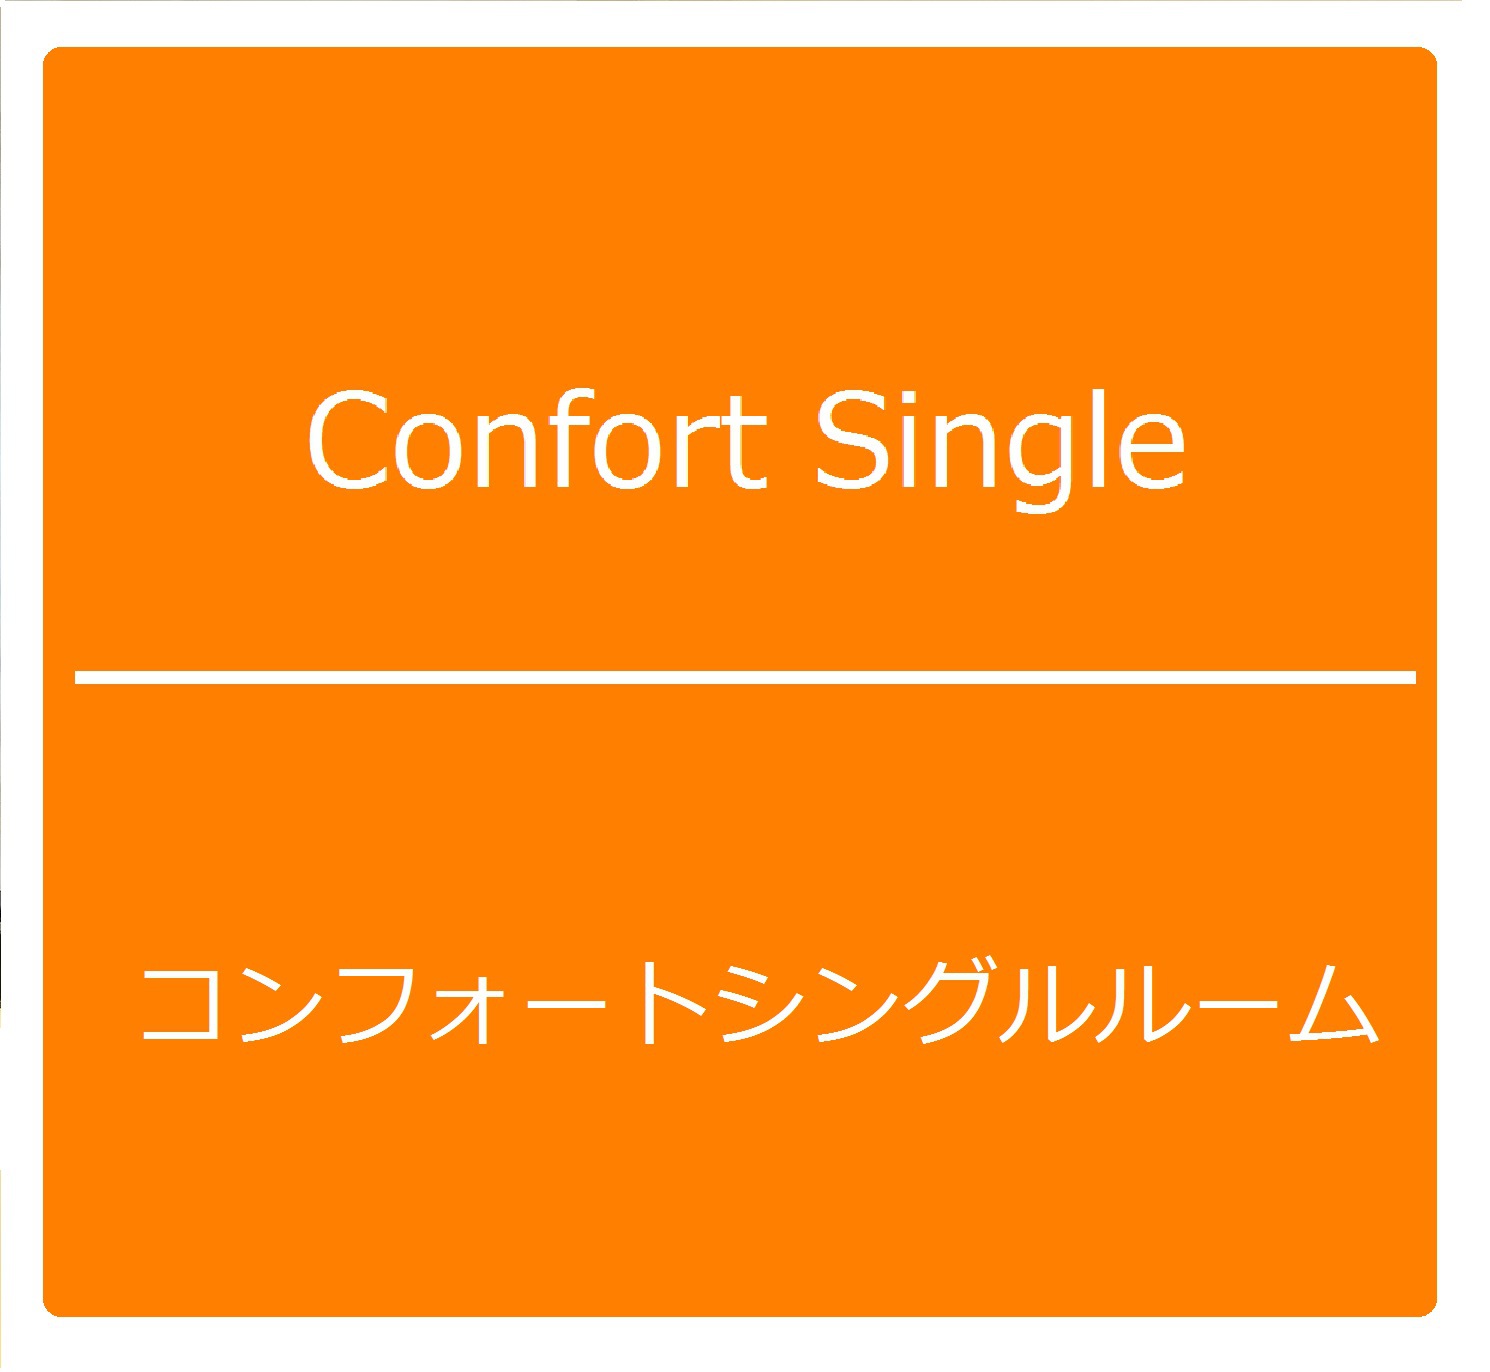 Confort Single